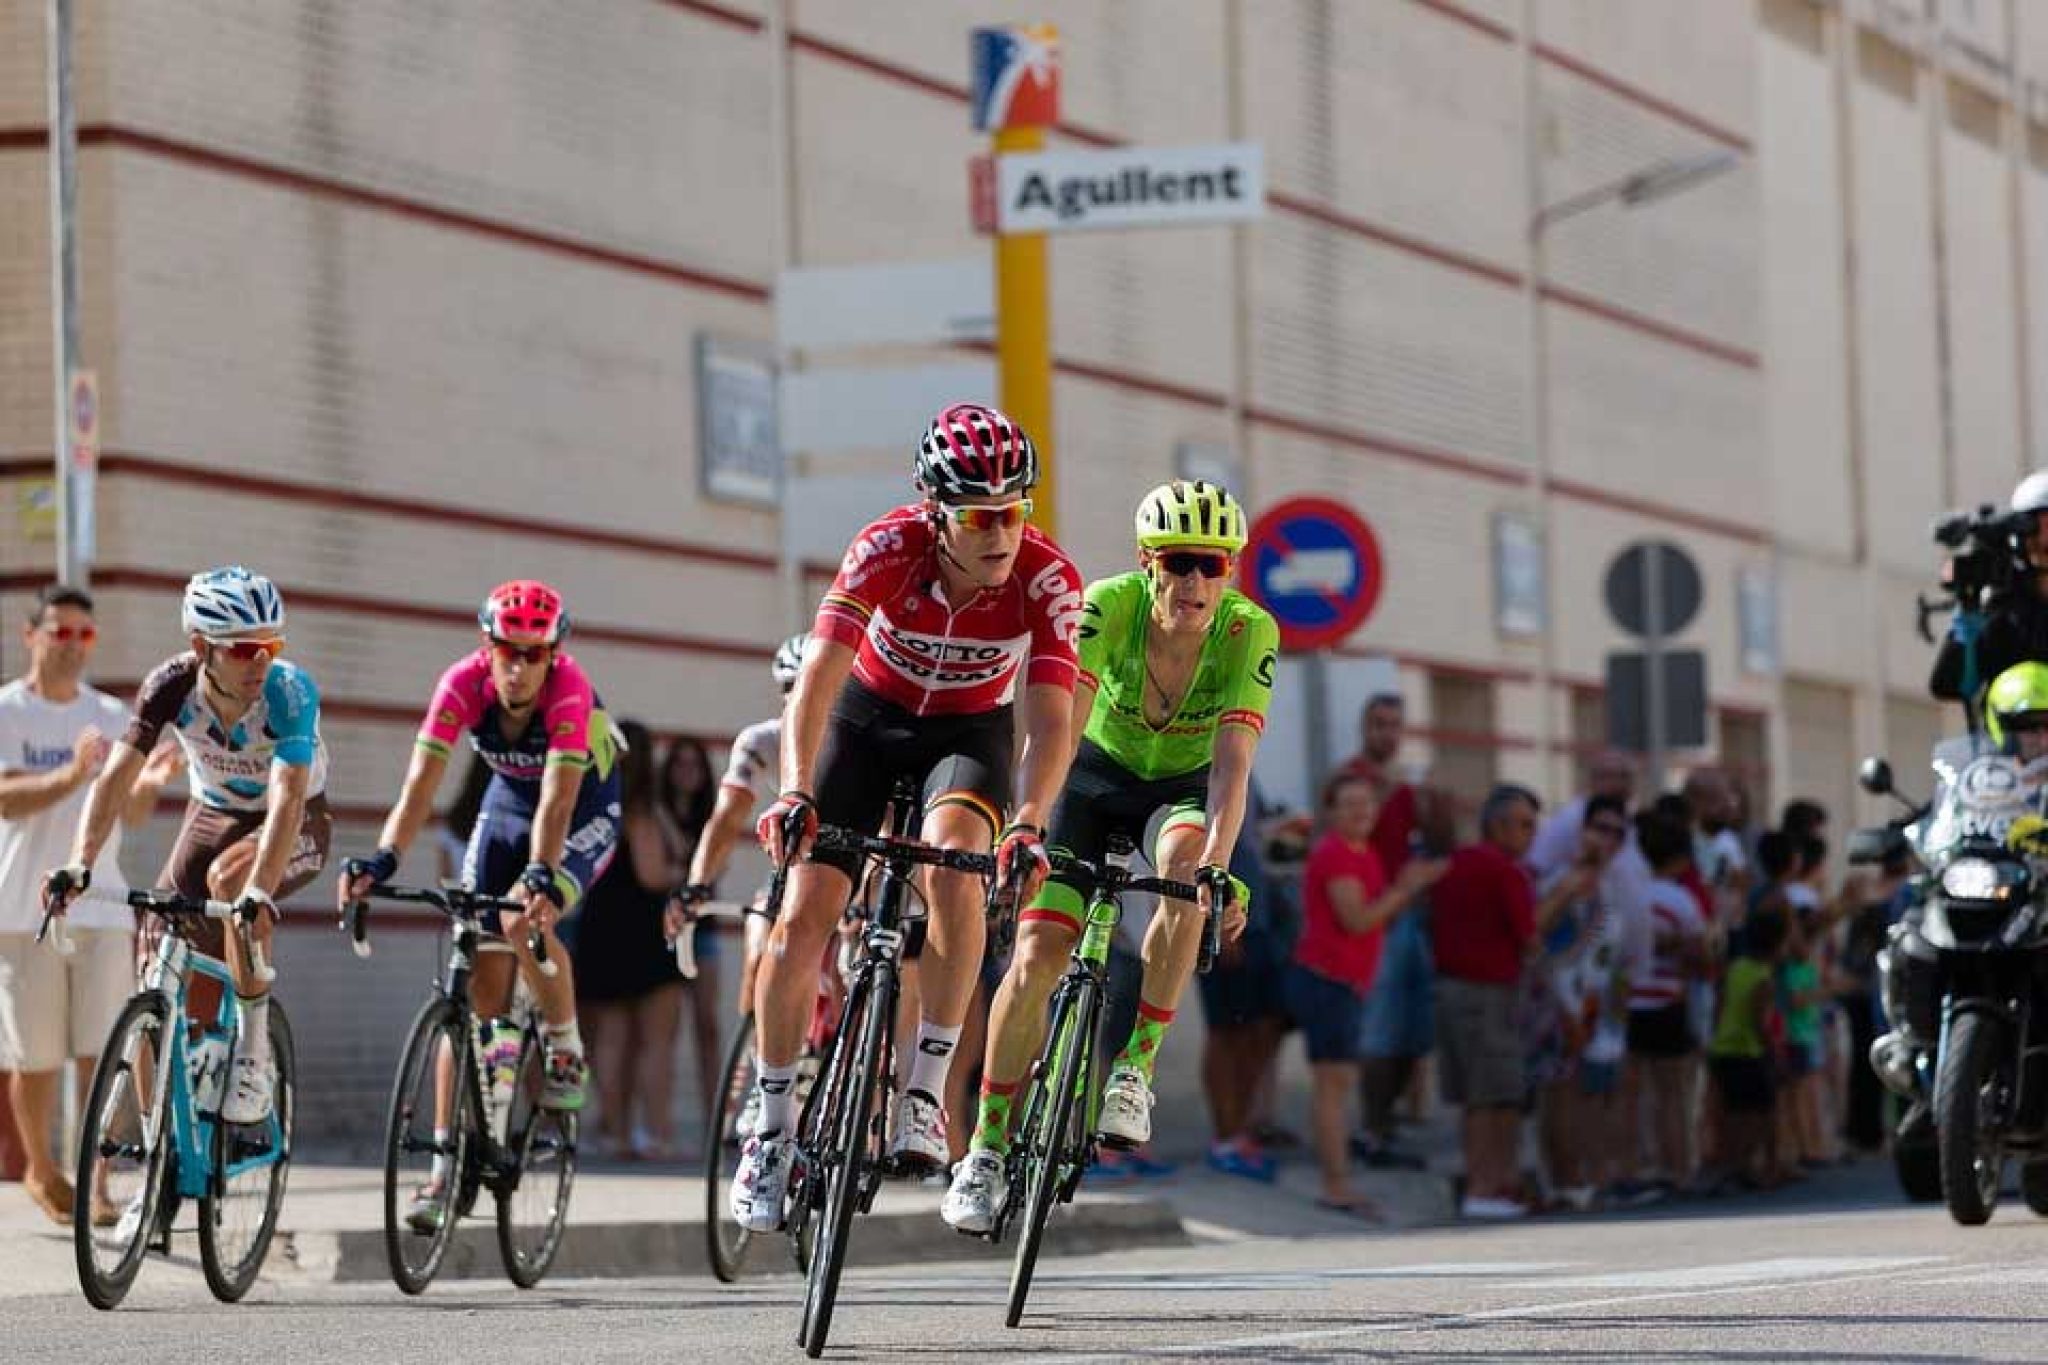 How to Watch La Vuelta A España Live Stream in 2023